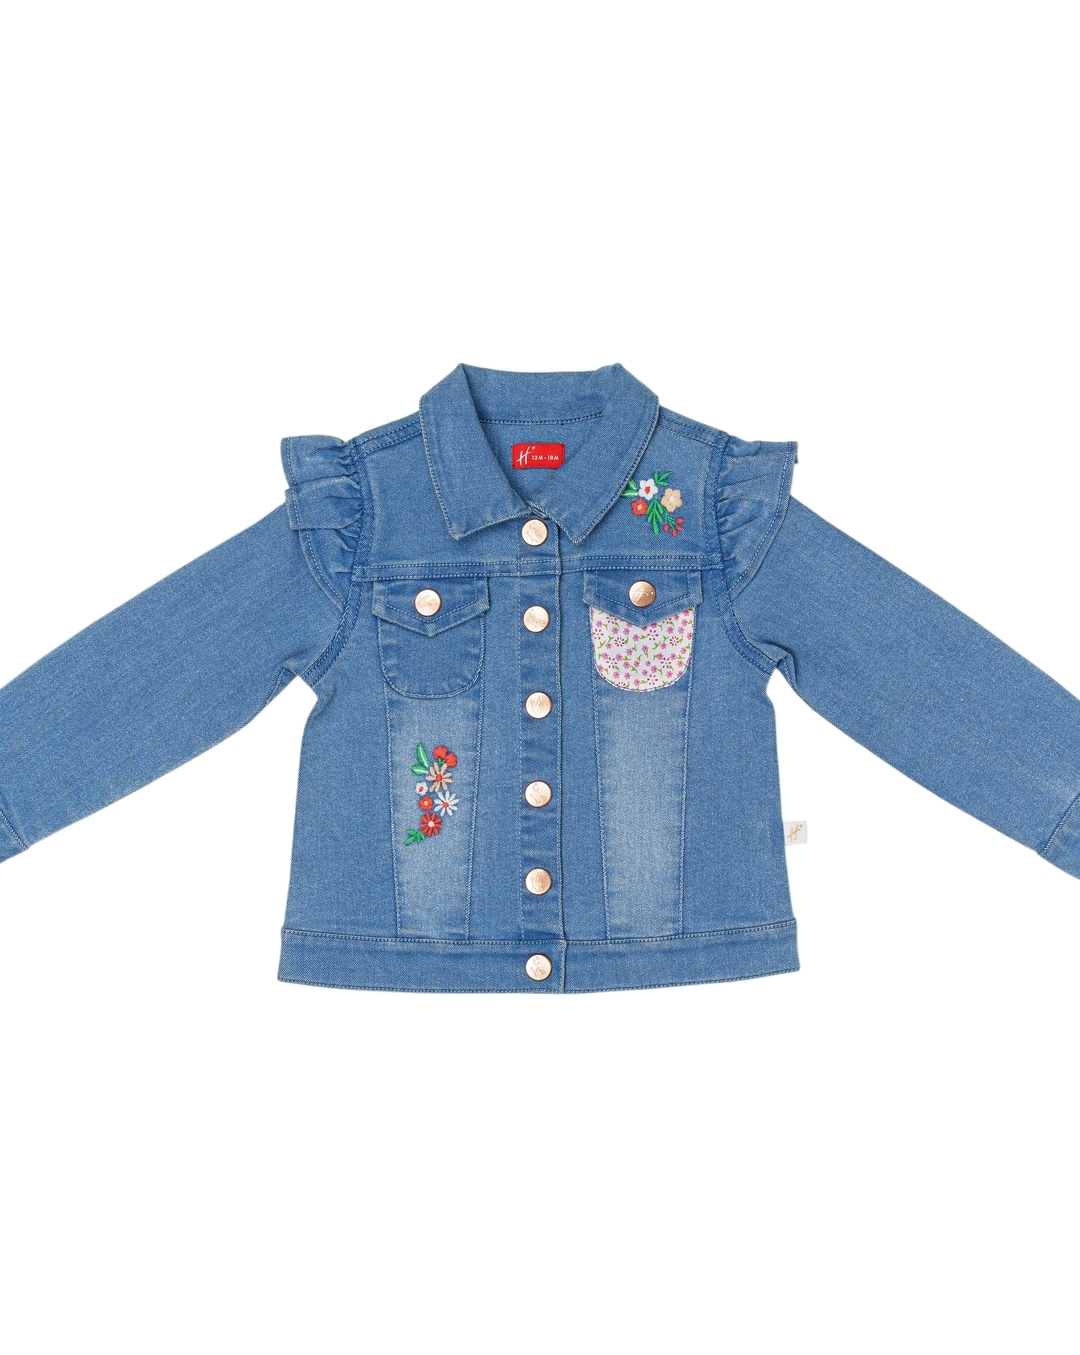 Shop Online Full Sleeve Denim Jacket for Boys, Zoul & Zera